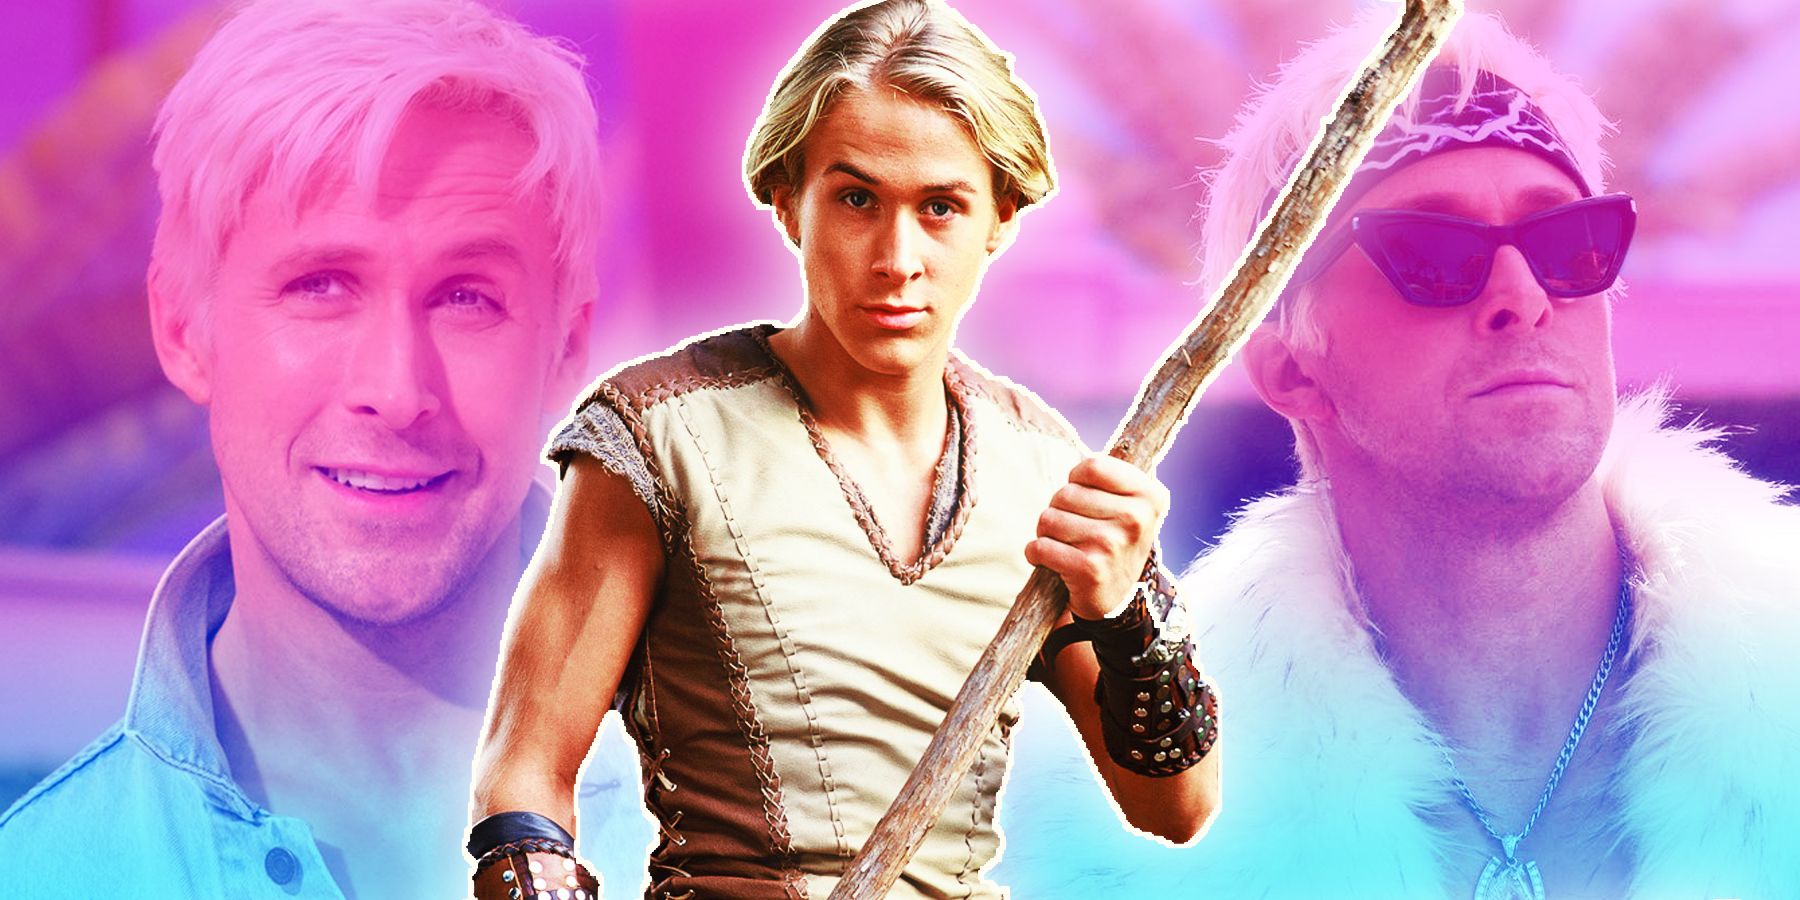 Ryan Gosling as Young Hercules and Ken in Barbie